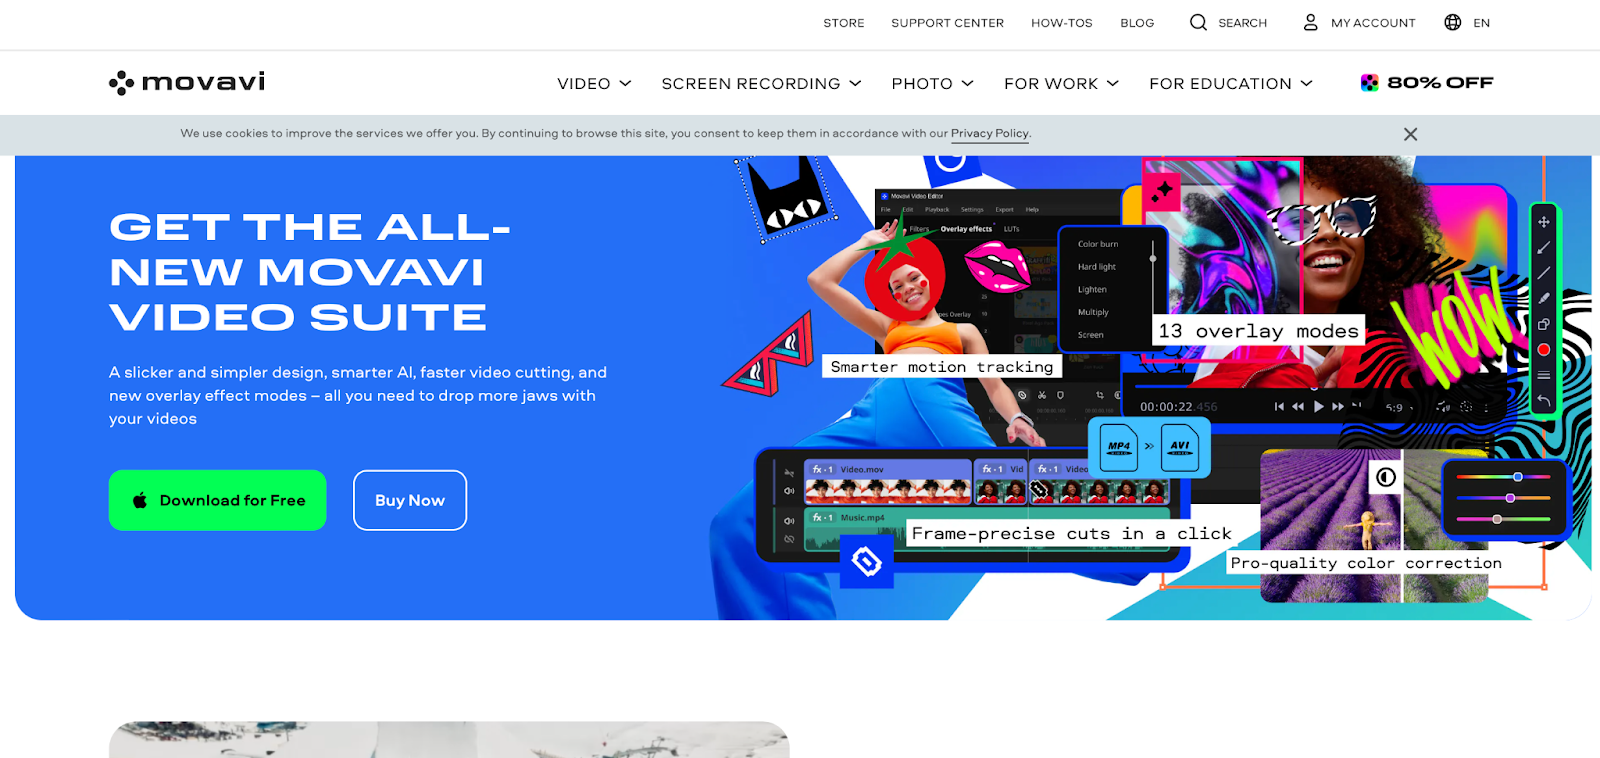 Movavi homepage